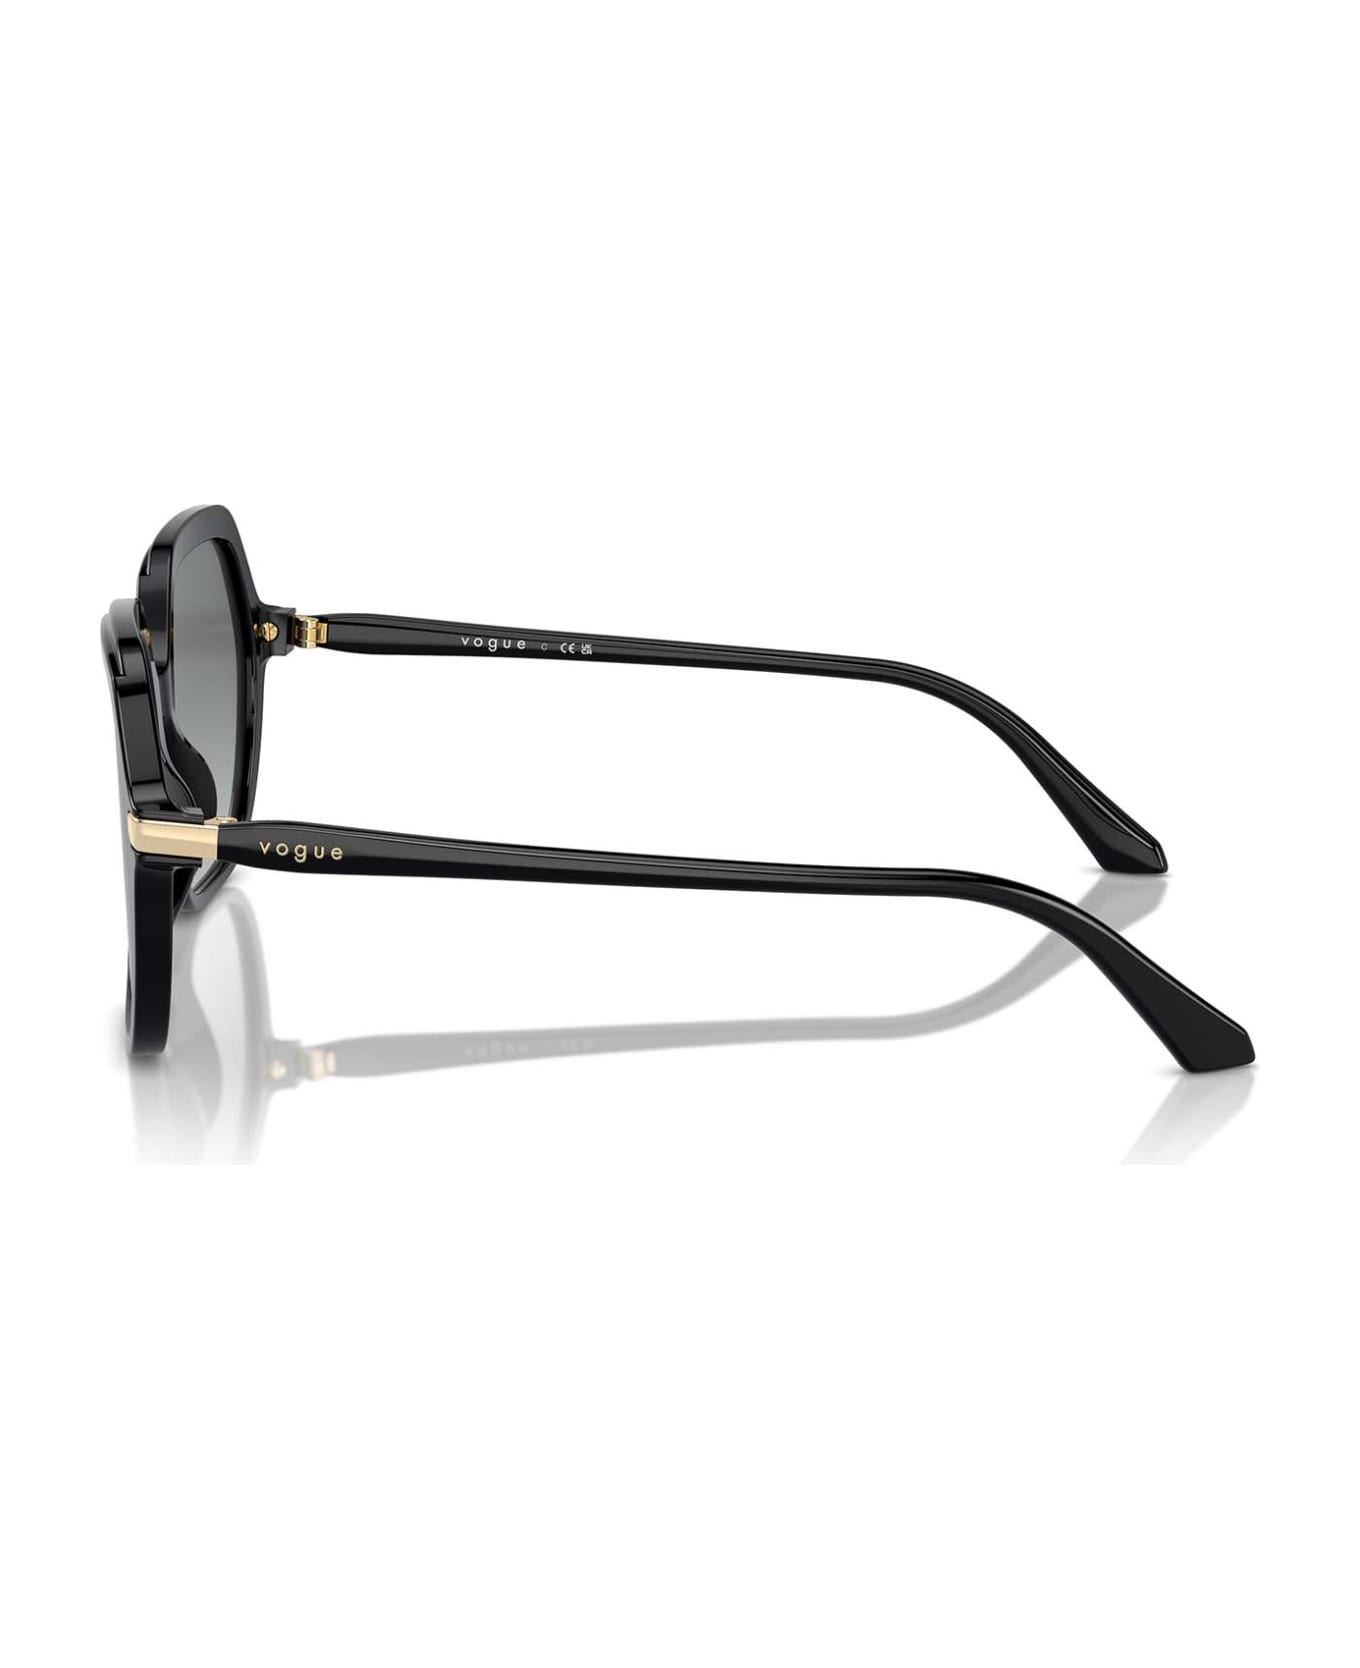 Vogue Eyewear Vo5561s Black Sunglasses - Black